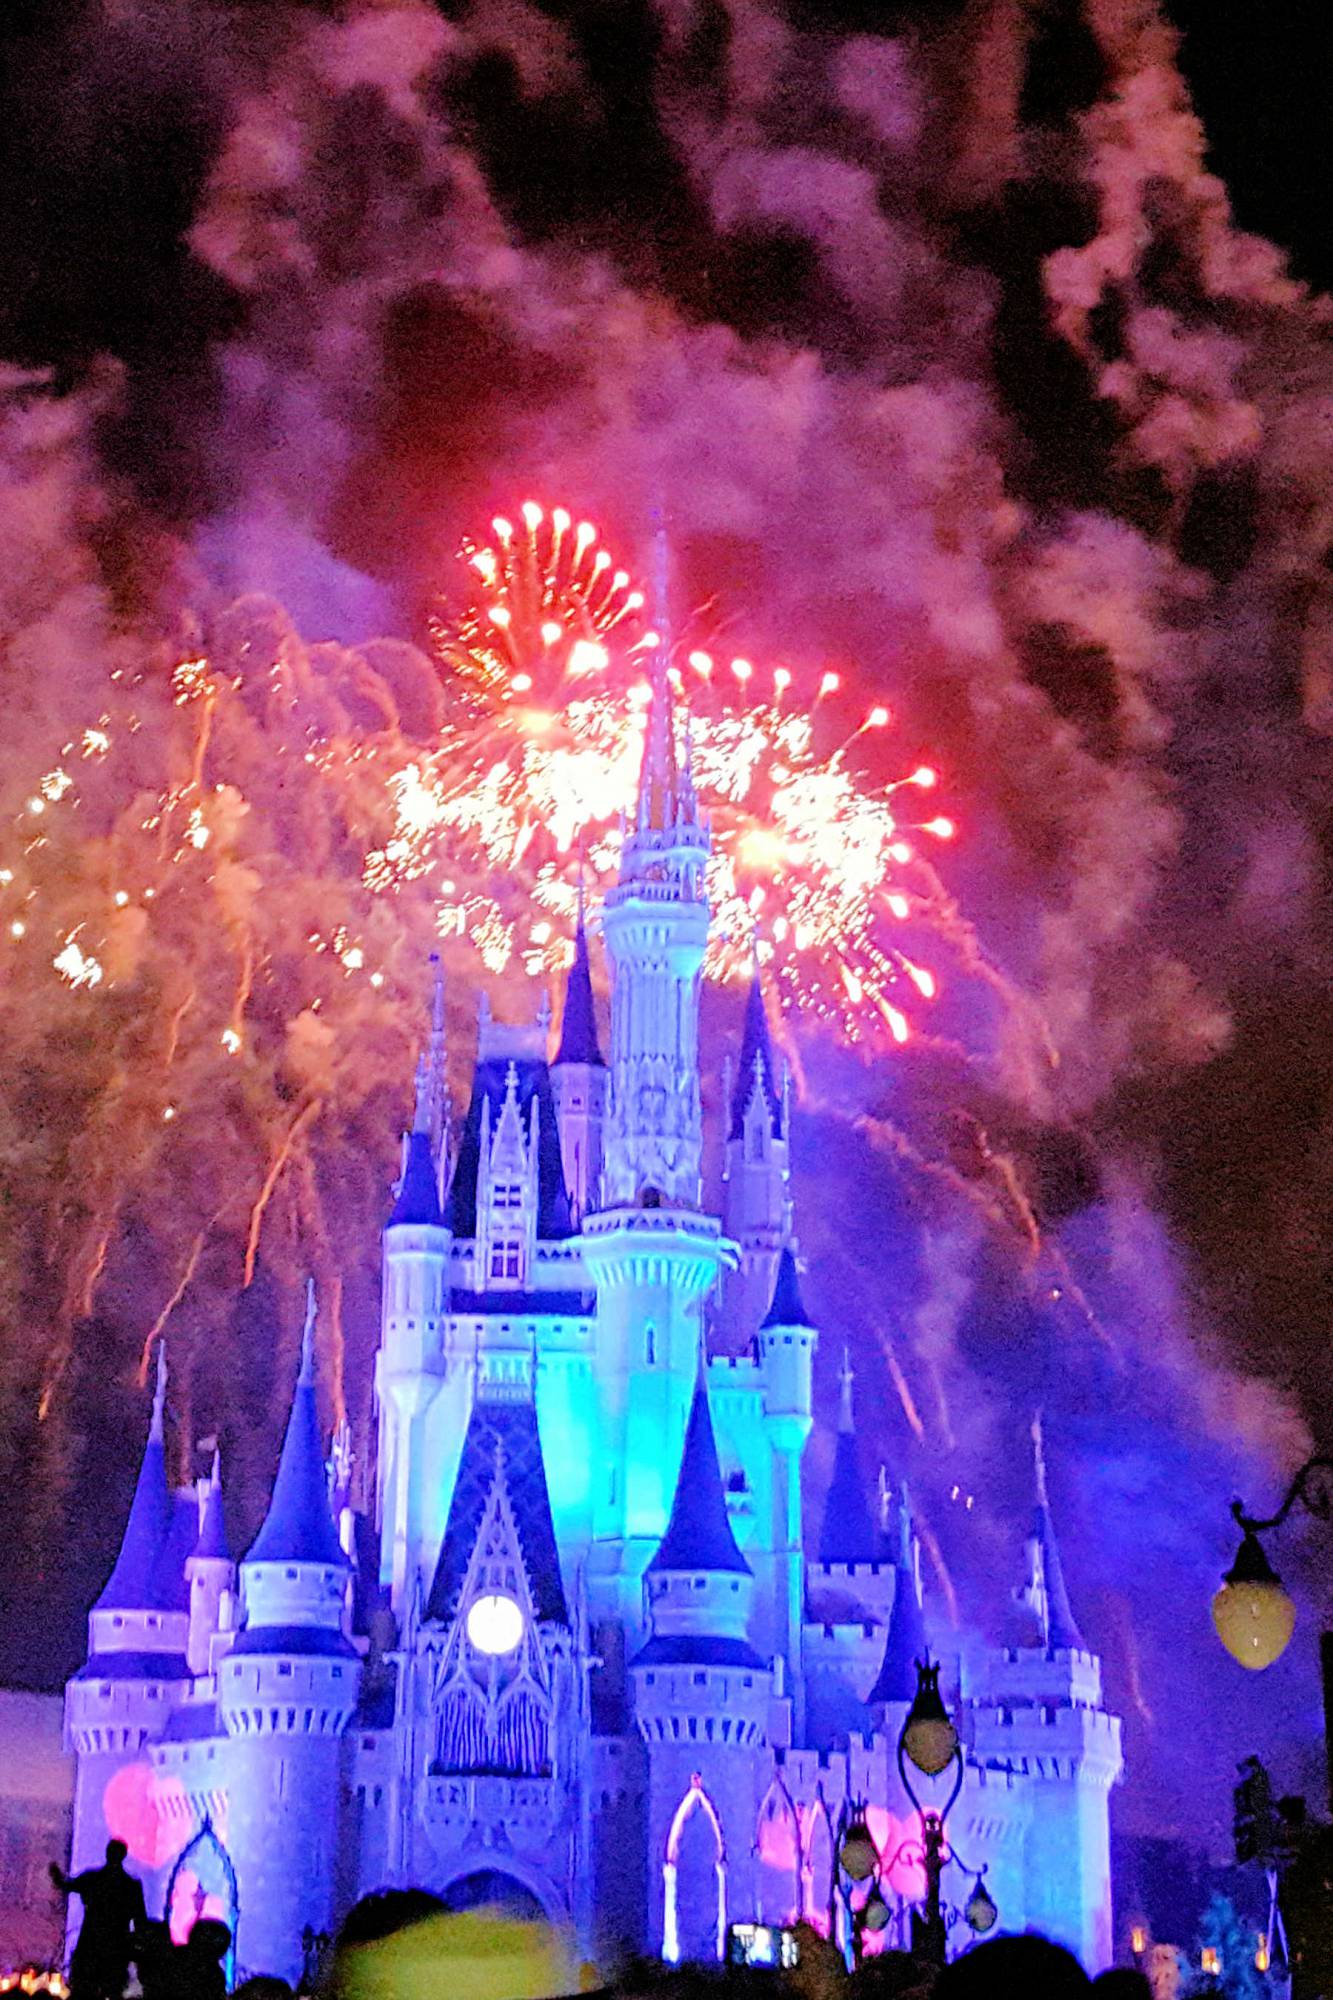 Walt Disney World Magic Kingdom Wishes Fireworks over the Castle